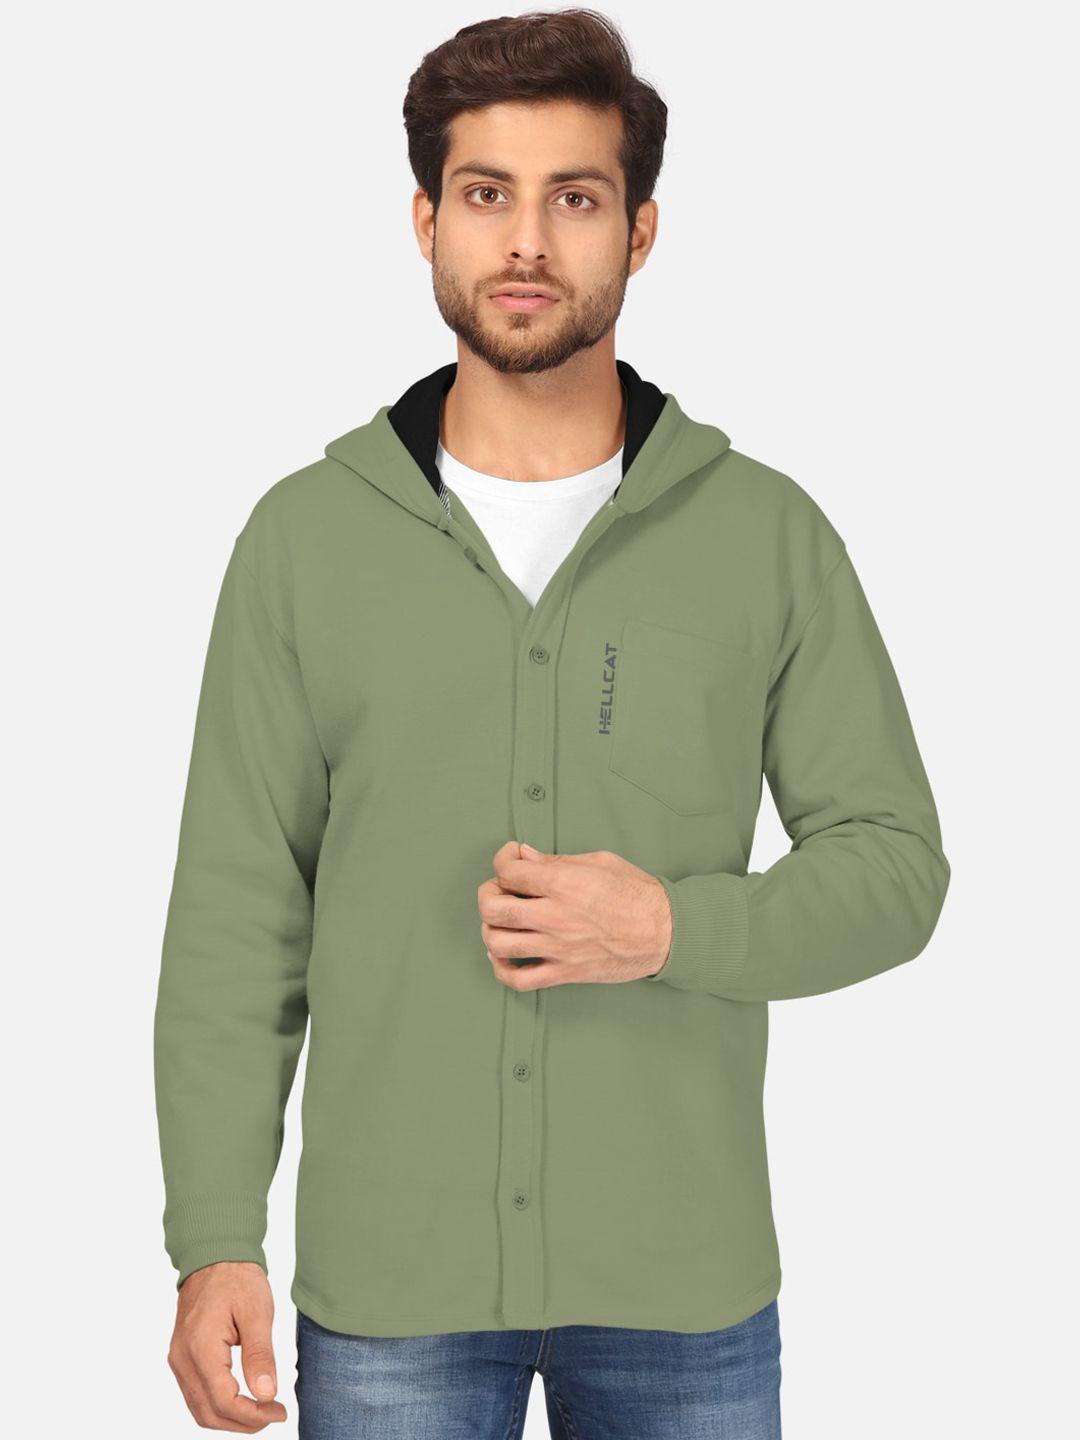 bullmer-men-lime-green-hooded-sweatshirt